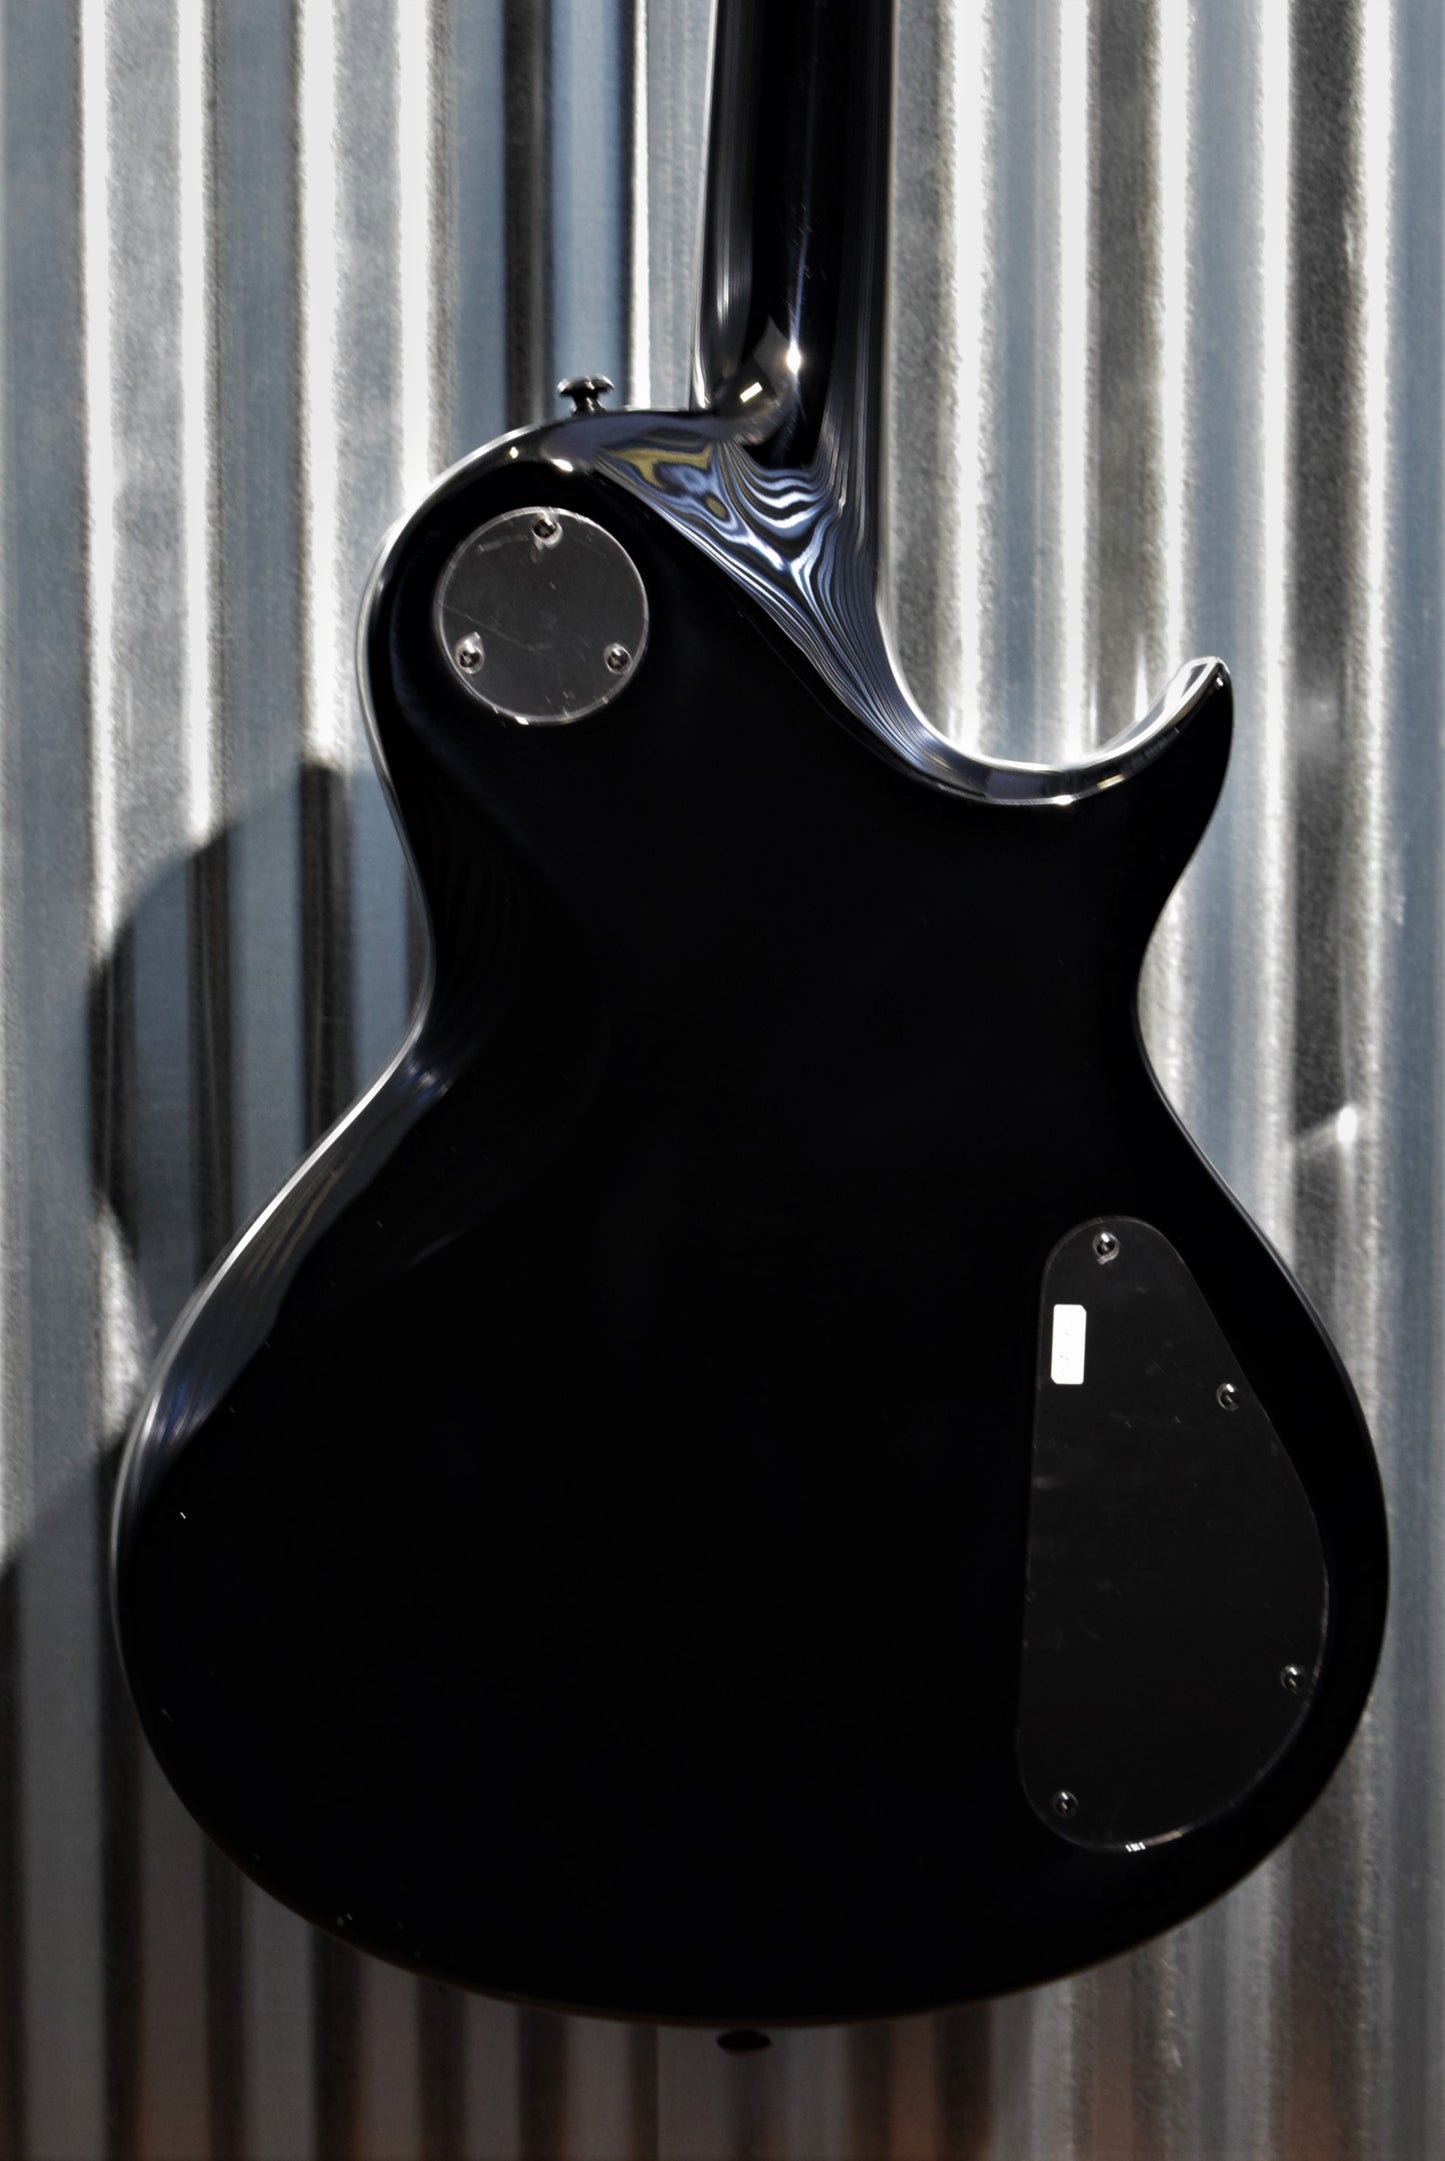 Washburn Parallaxe L20B Black Left Hand Guitar Duncan #0039